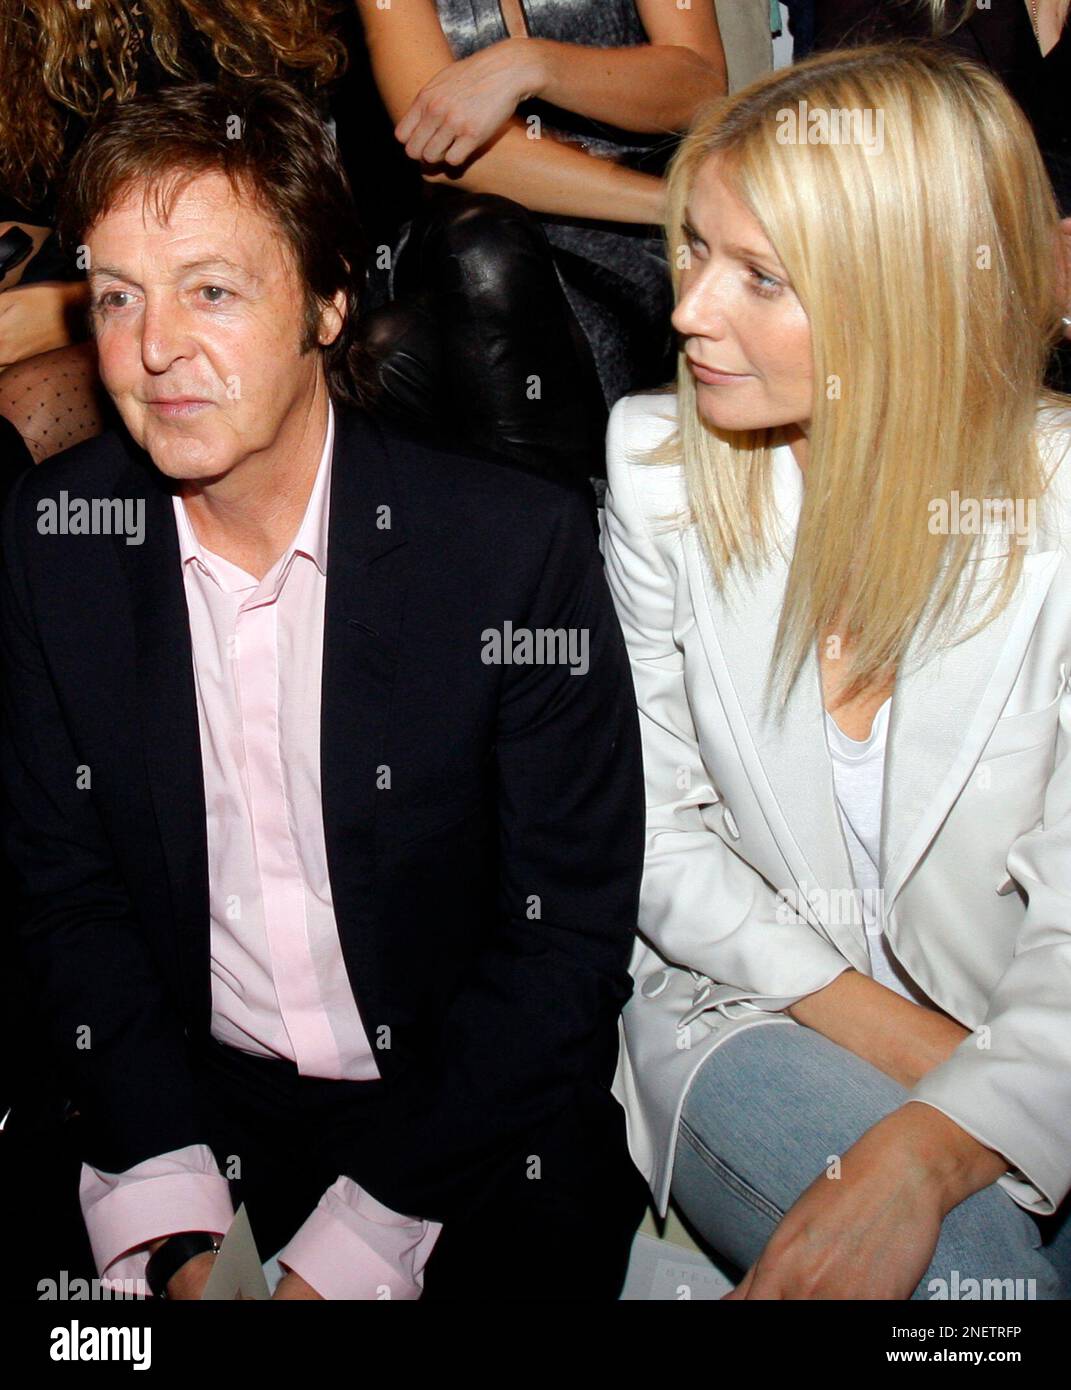 Paul McCartney Attends Daughter Stella McCartney's Runway Show at